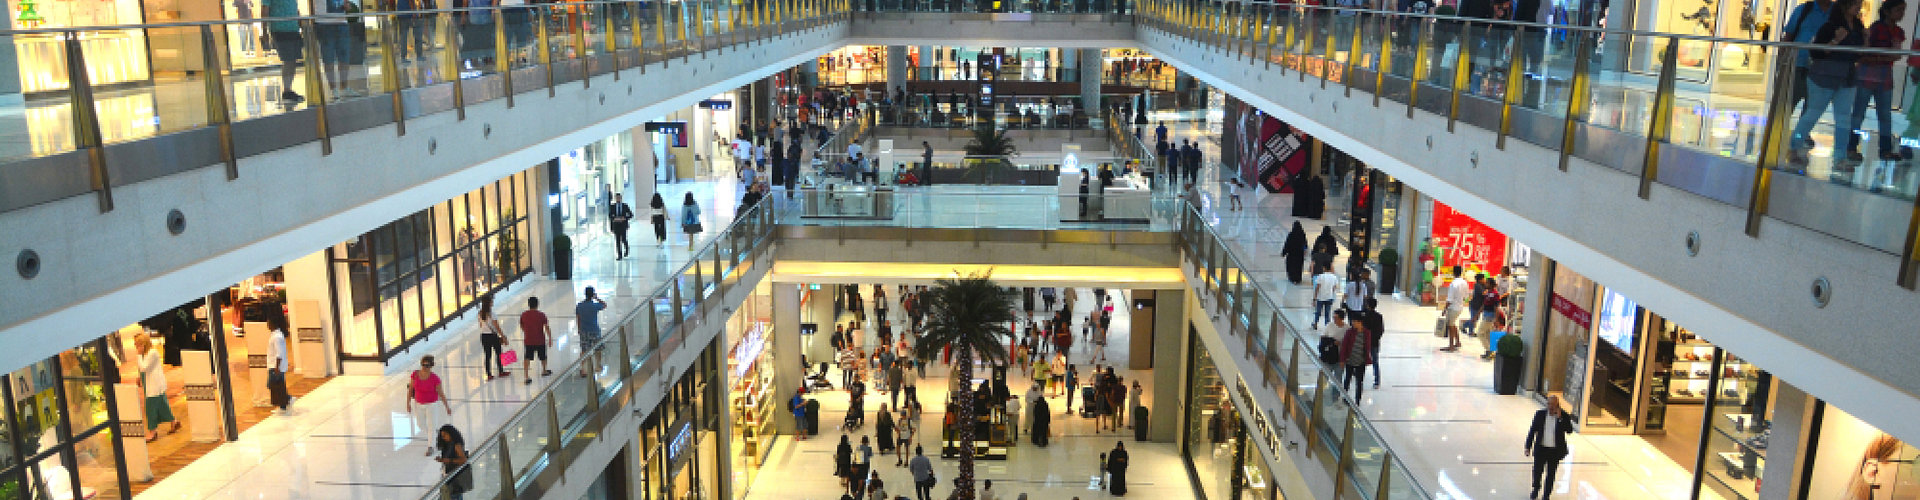 banner-malls